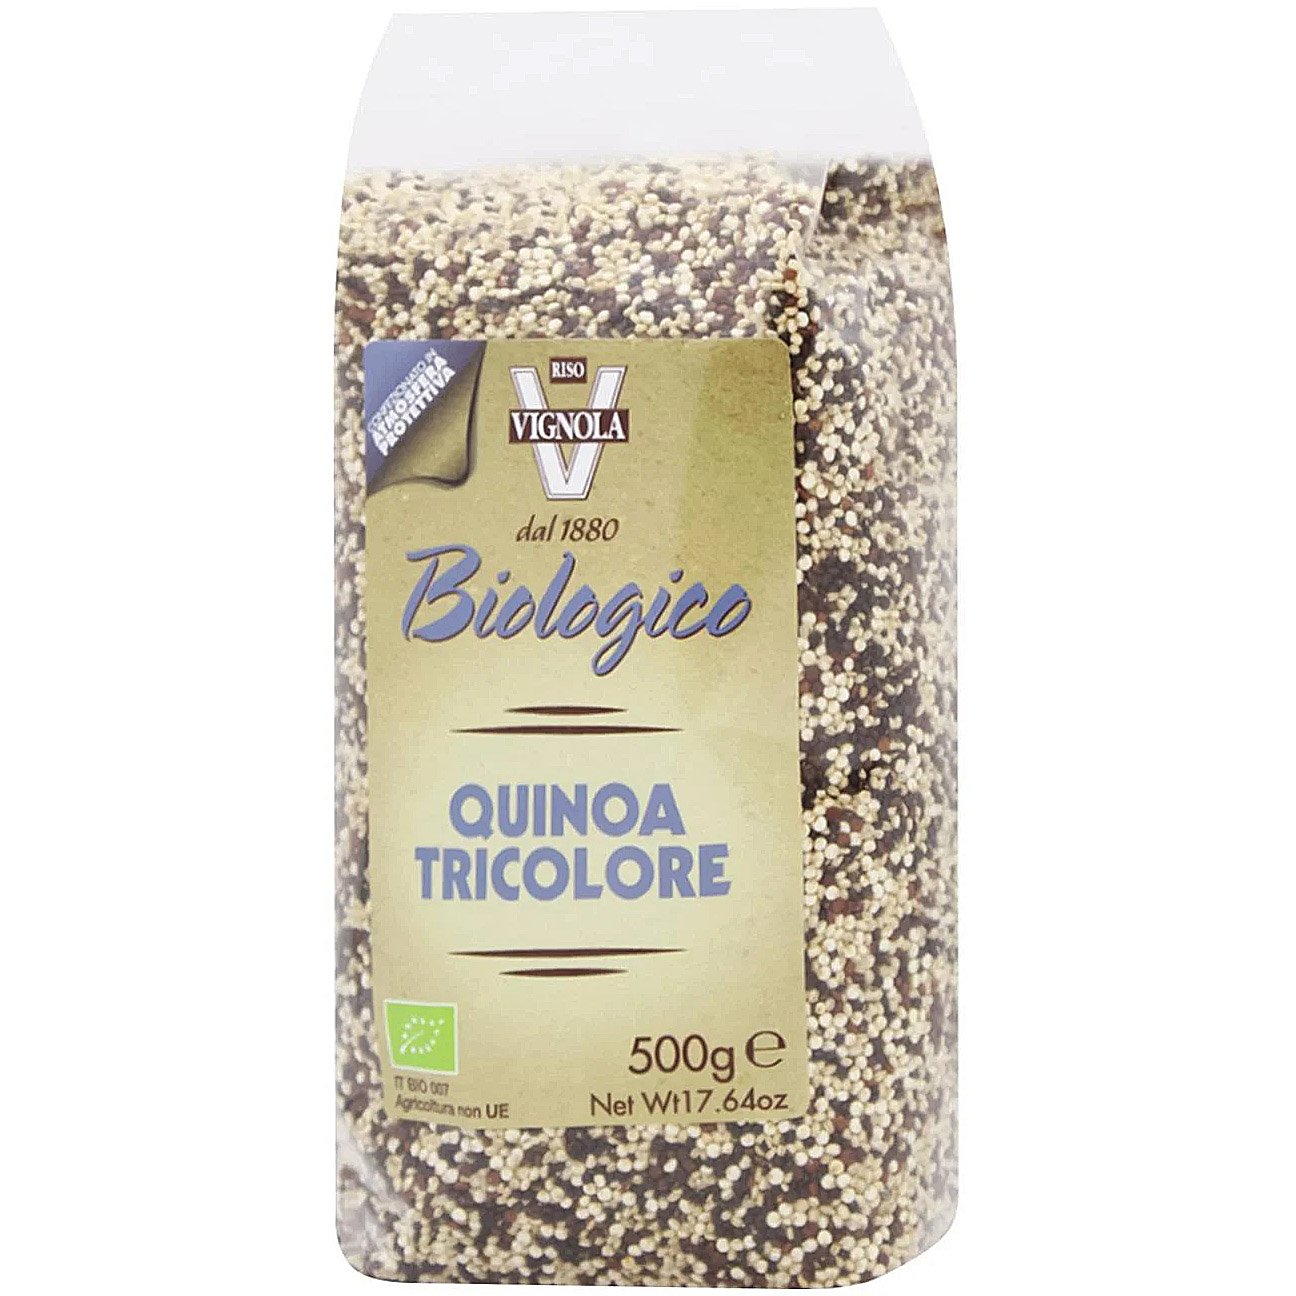 Киноа Riso Vignola Biologico Quinoa Tricolore микс 500 г - фото 1